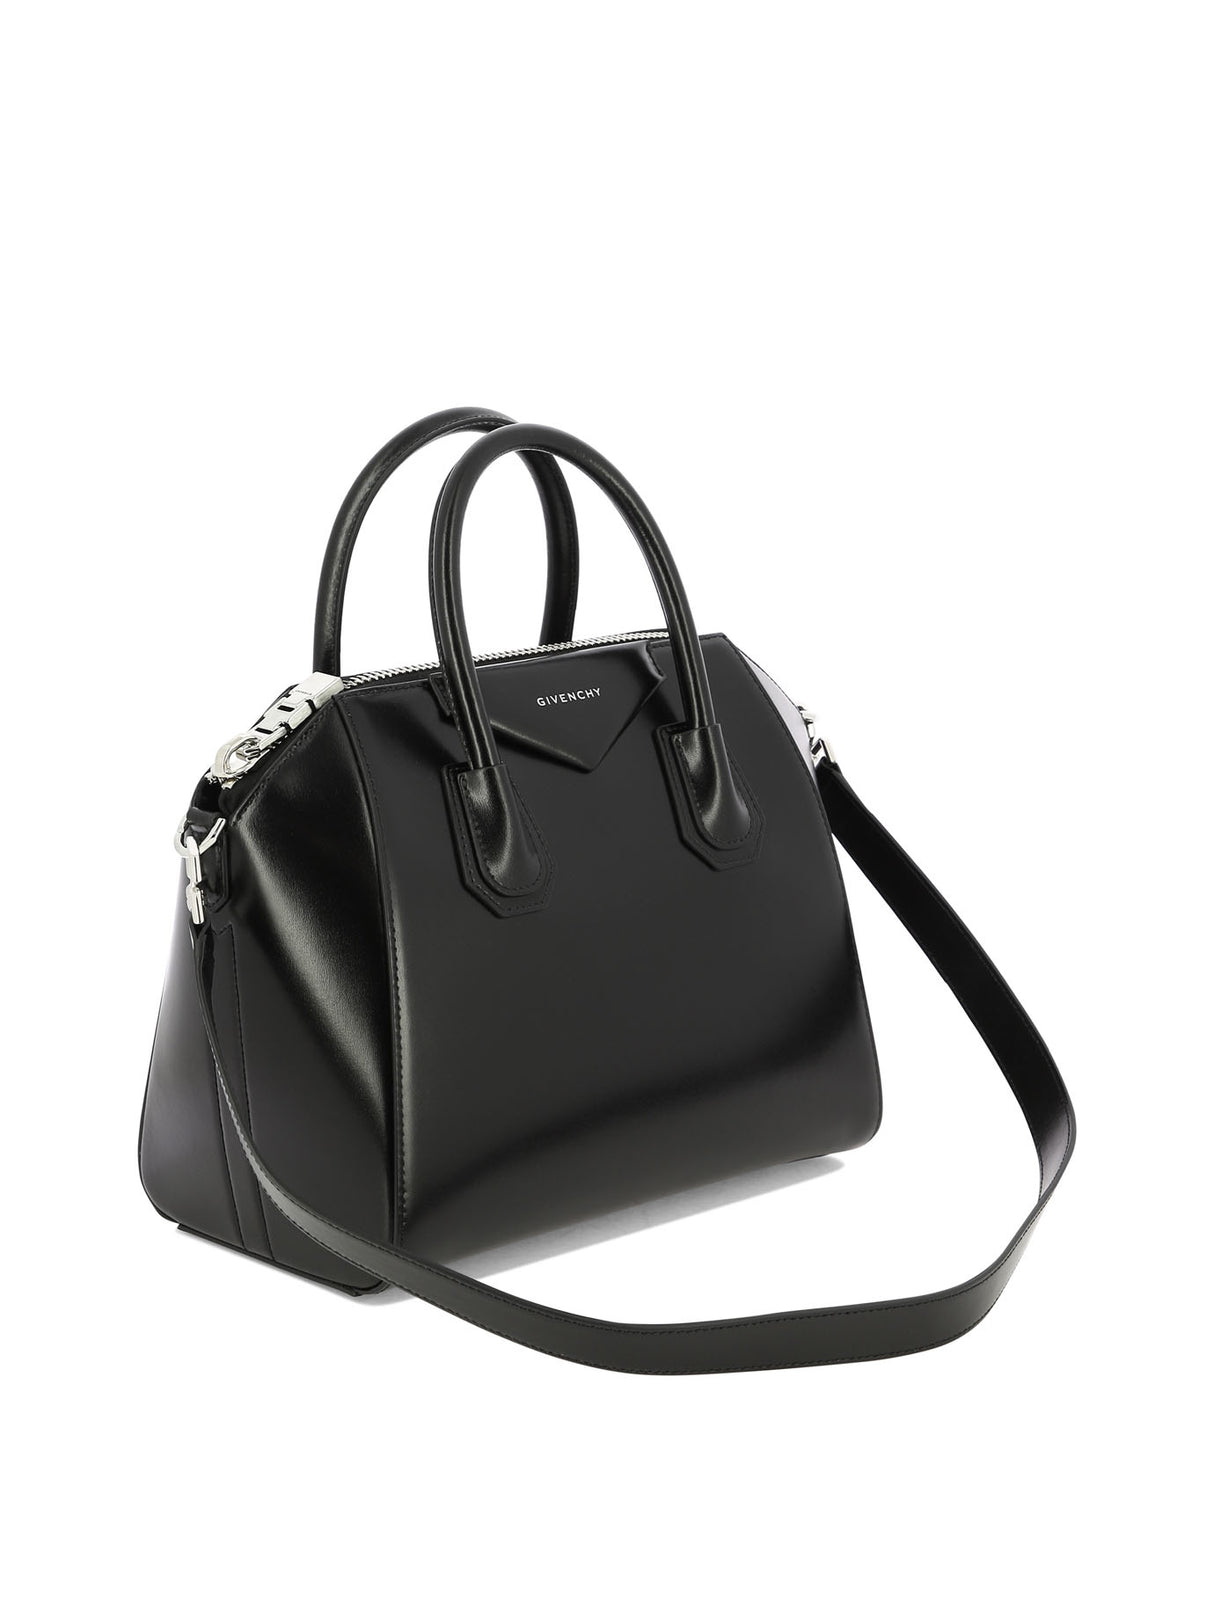 GIVENCHY "Antigona Small" Elegant Black Leather Mini Handbag with Adjustable Strap